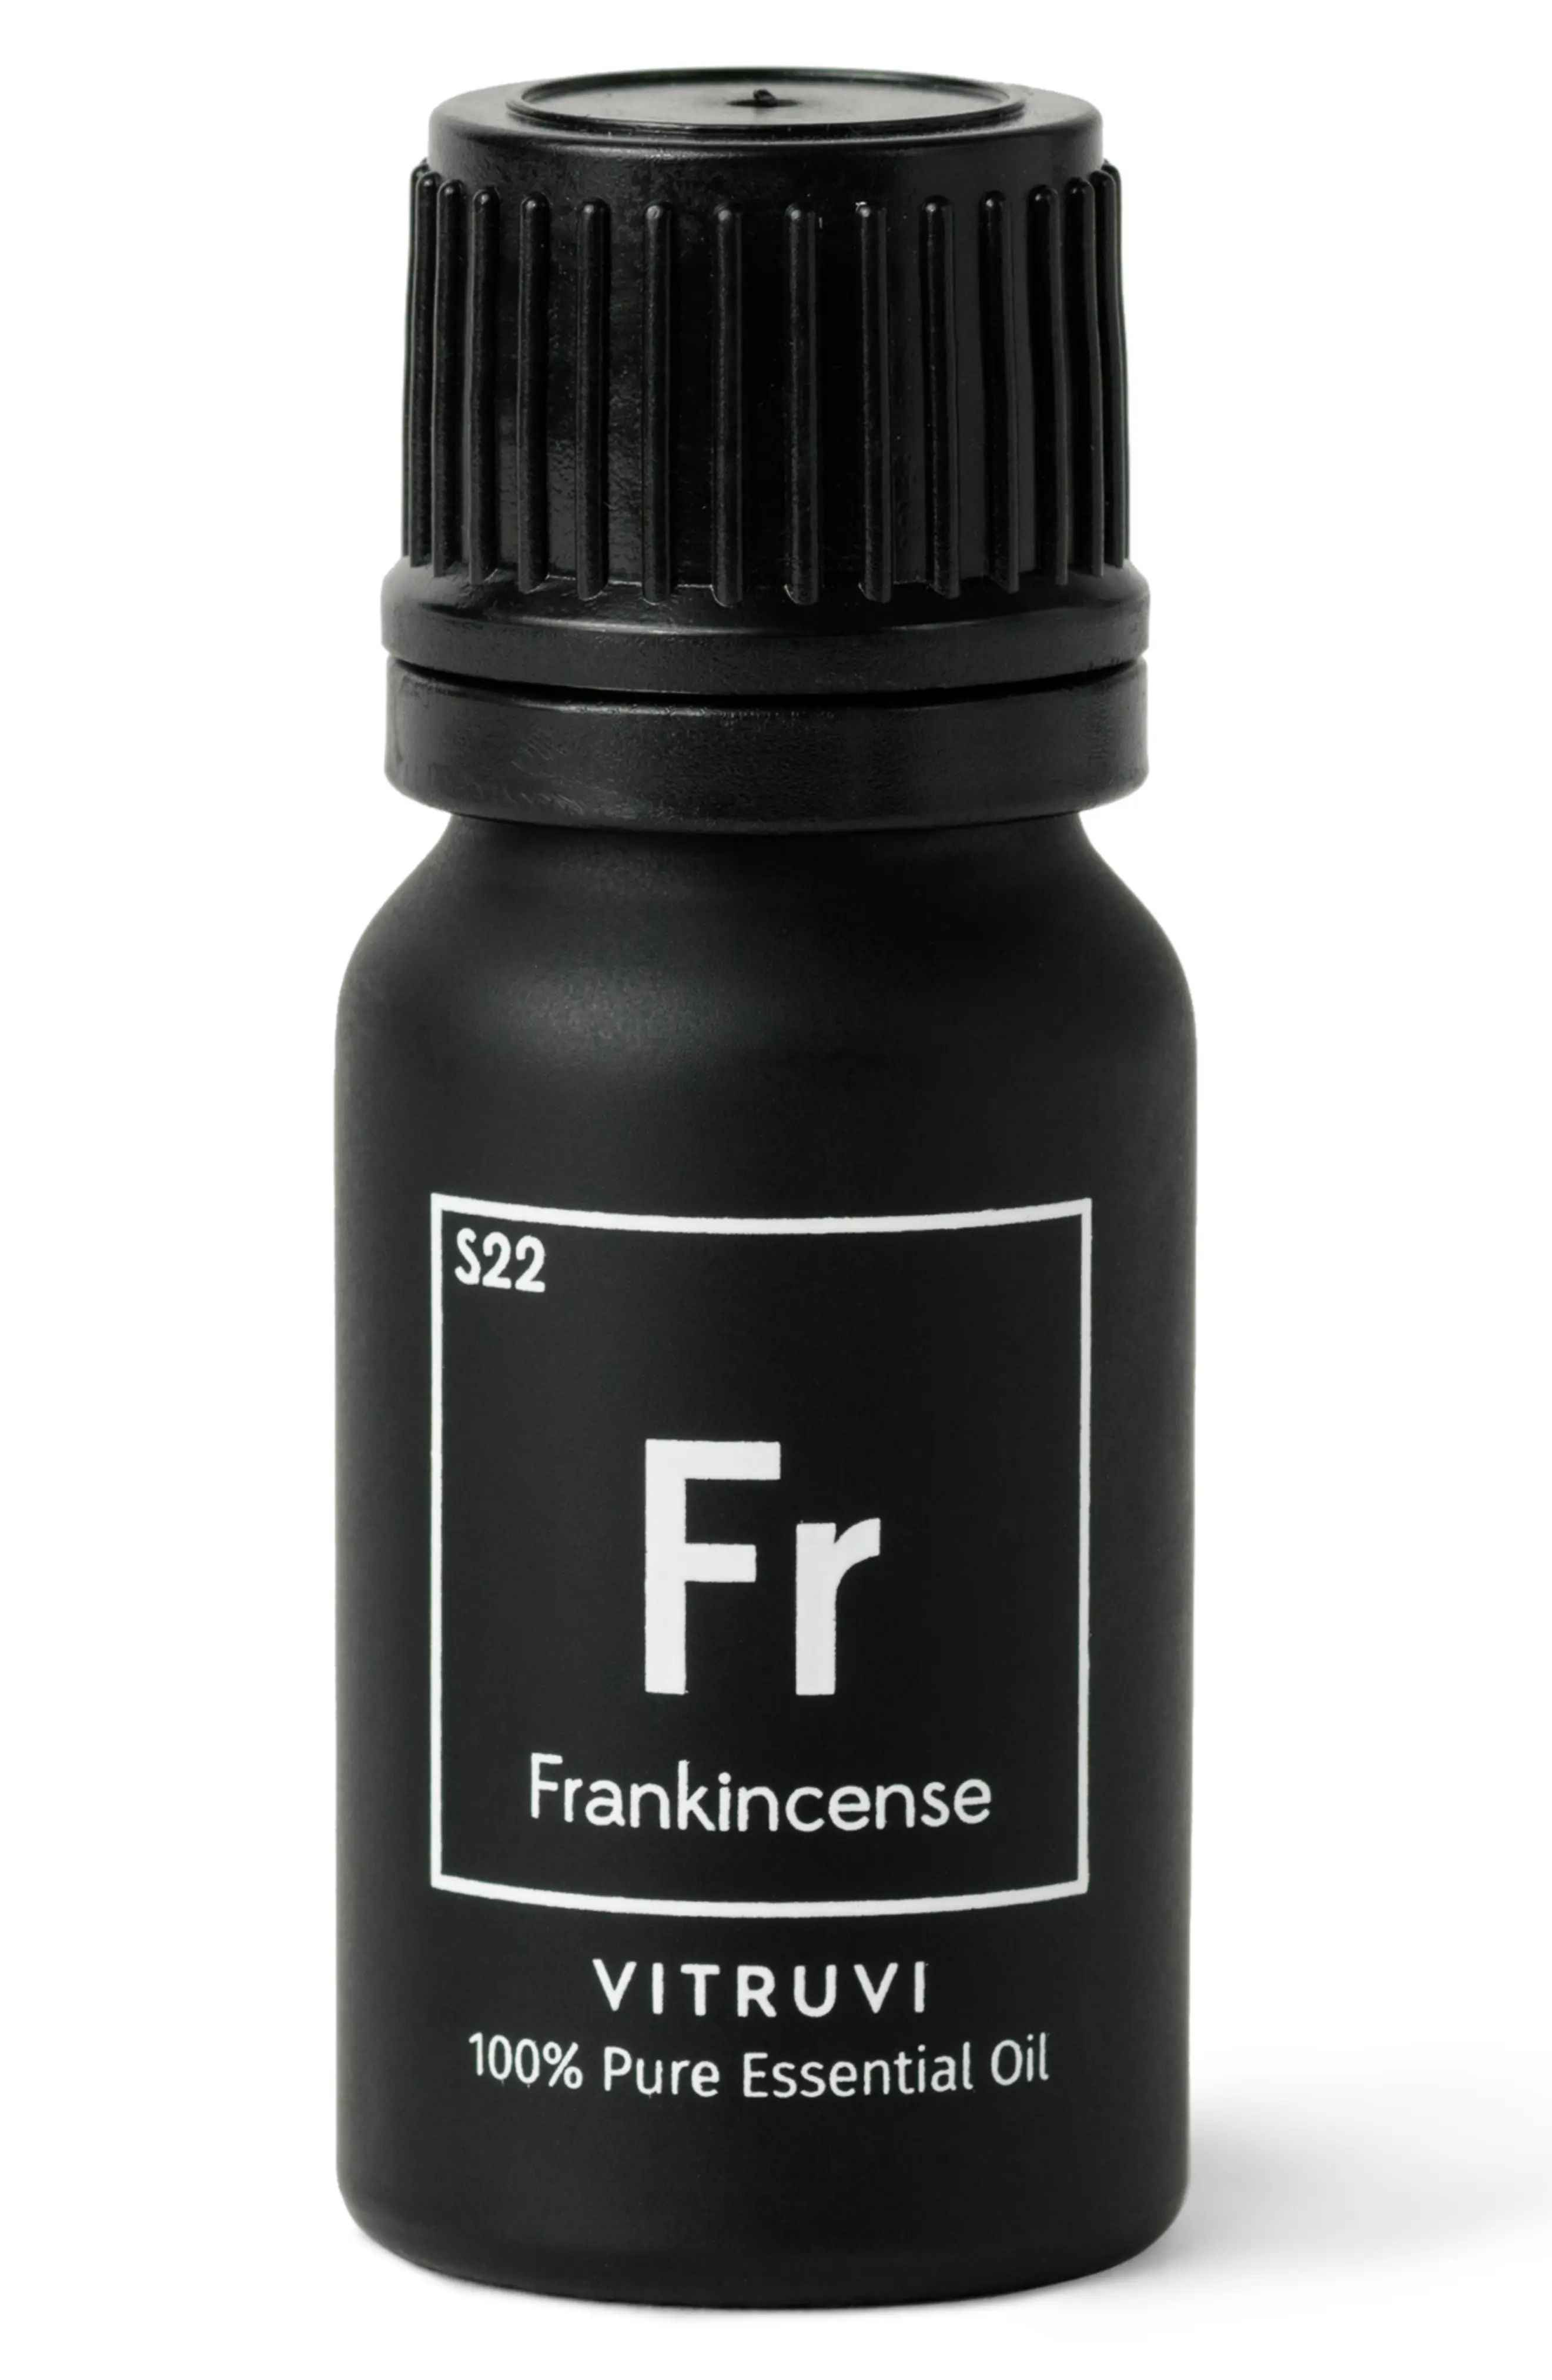 Vitruvi Frankincense Essential Oil at Nordstrom | Nordstrom